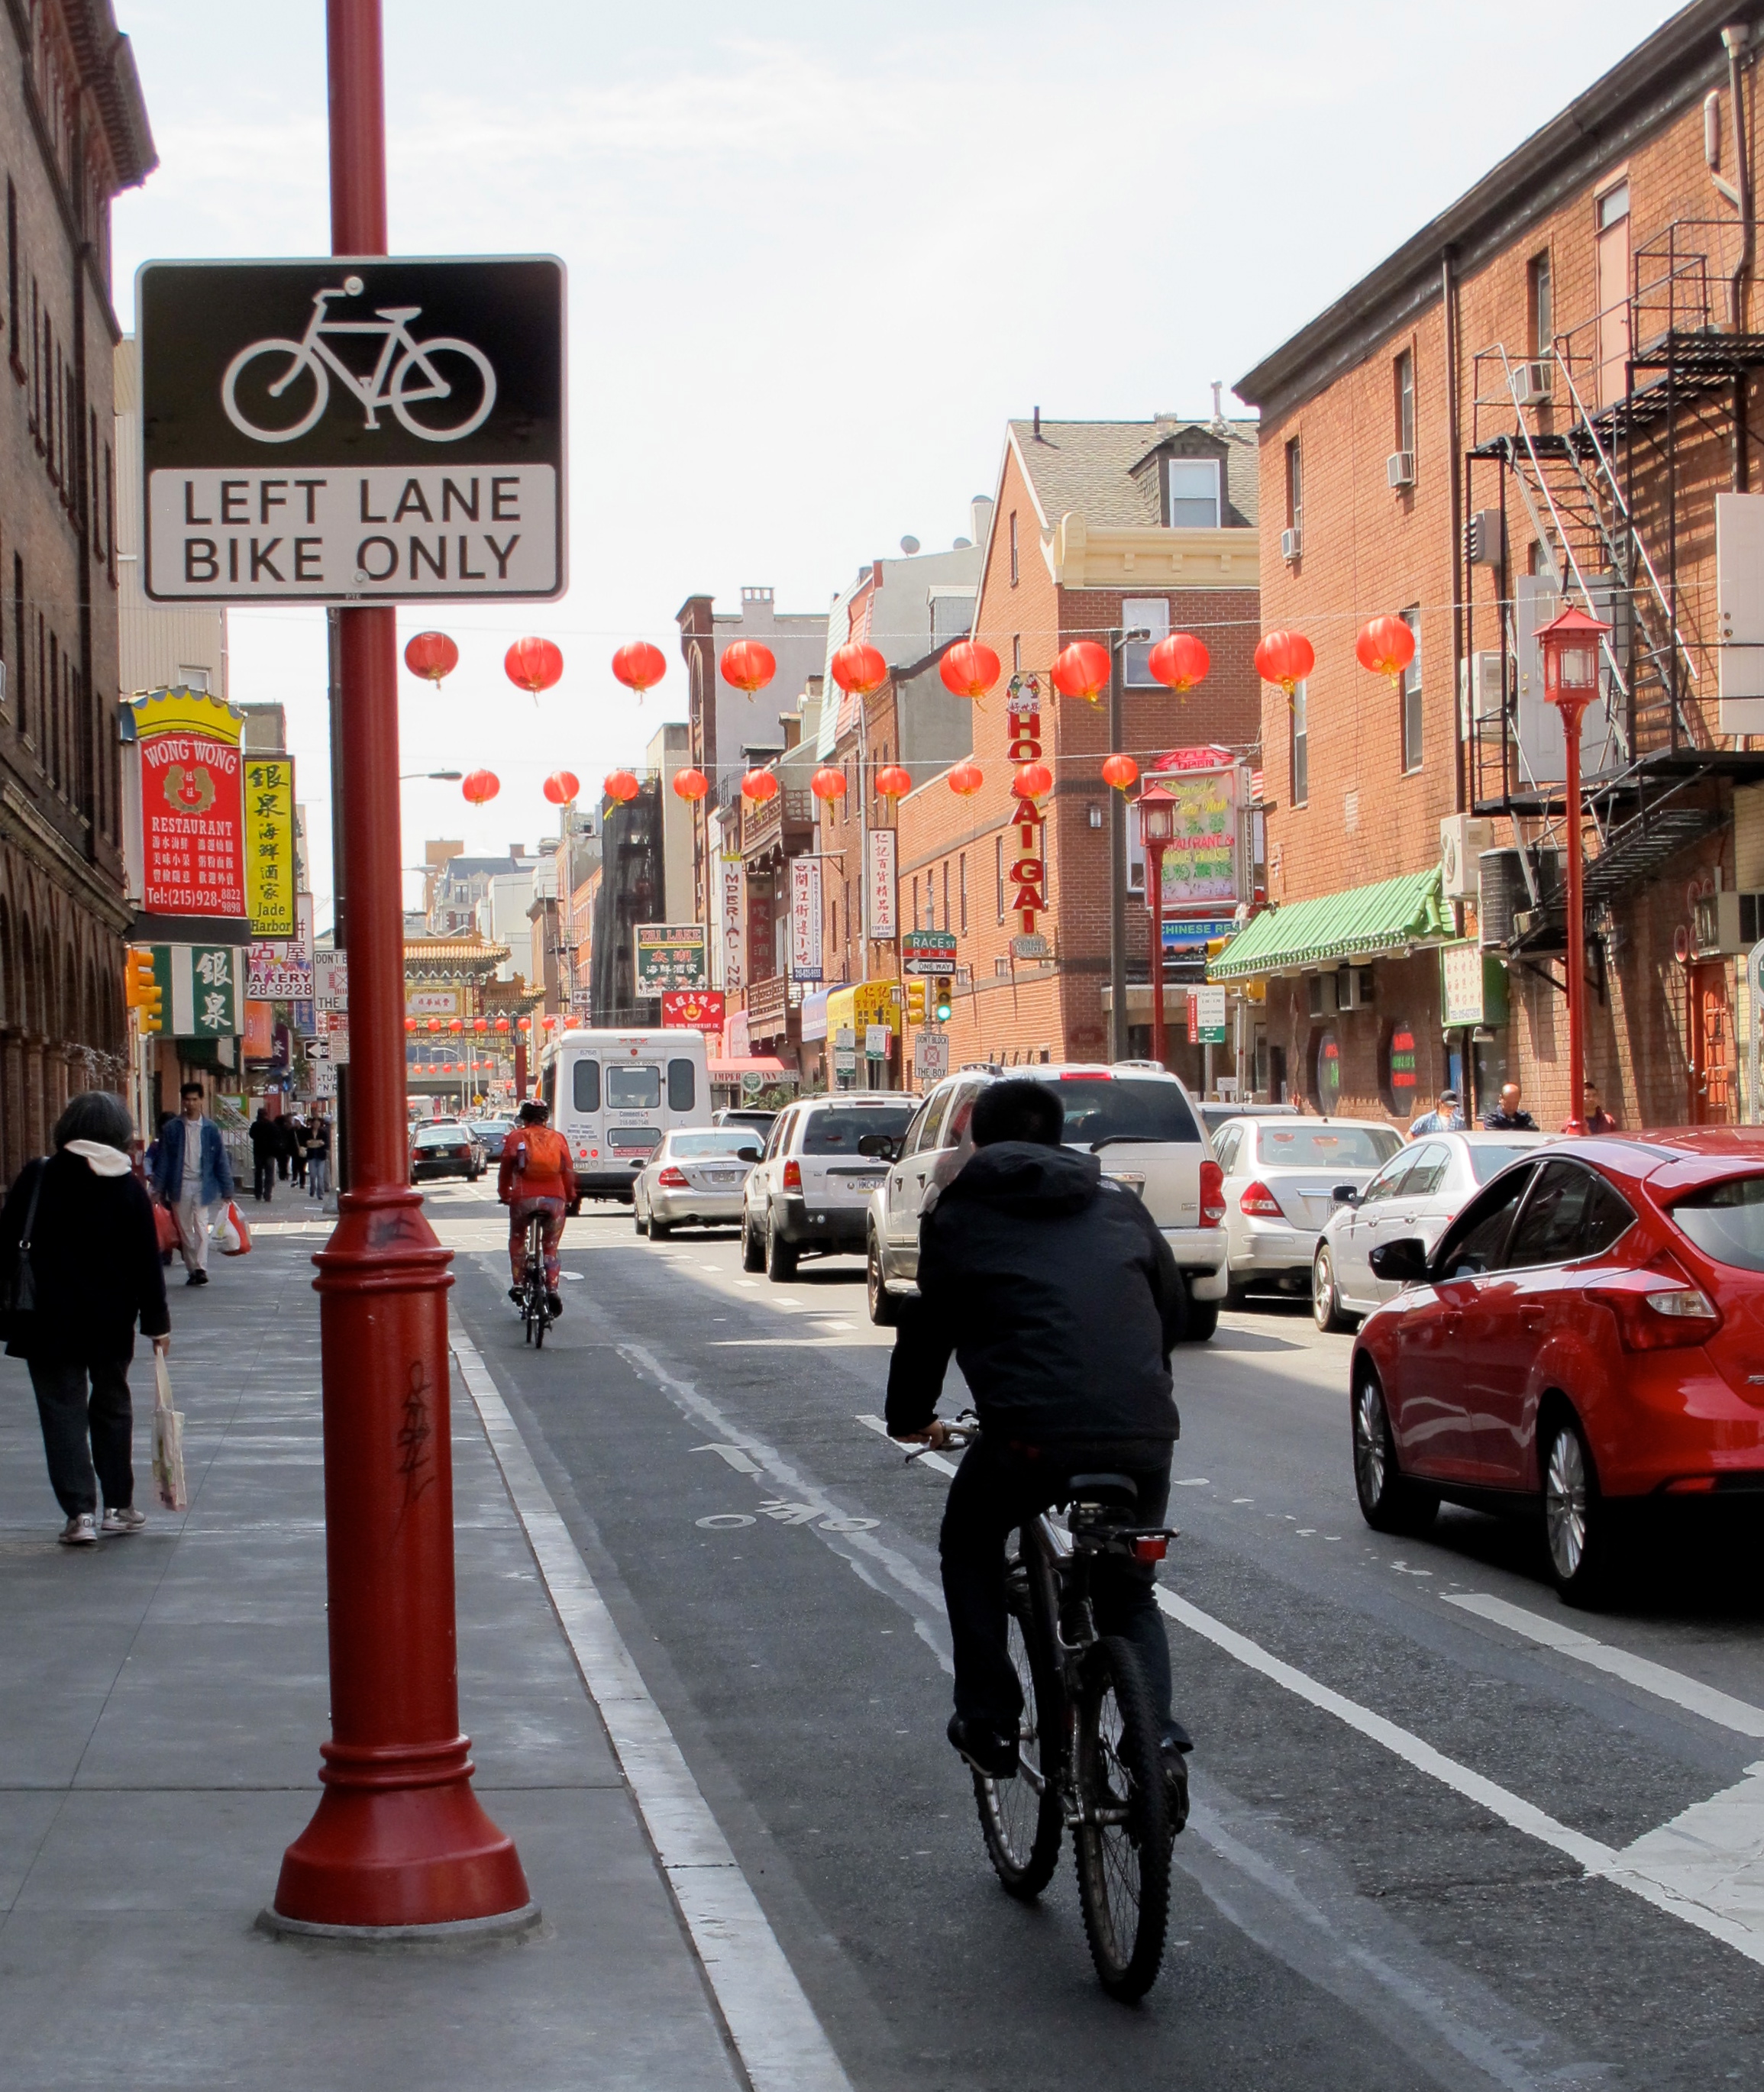 Chinatown: The 10th Street bike lane causes concern